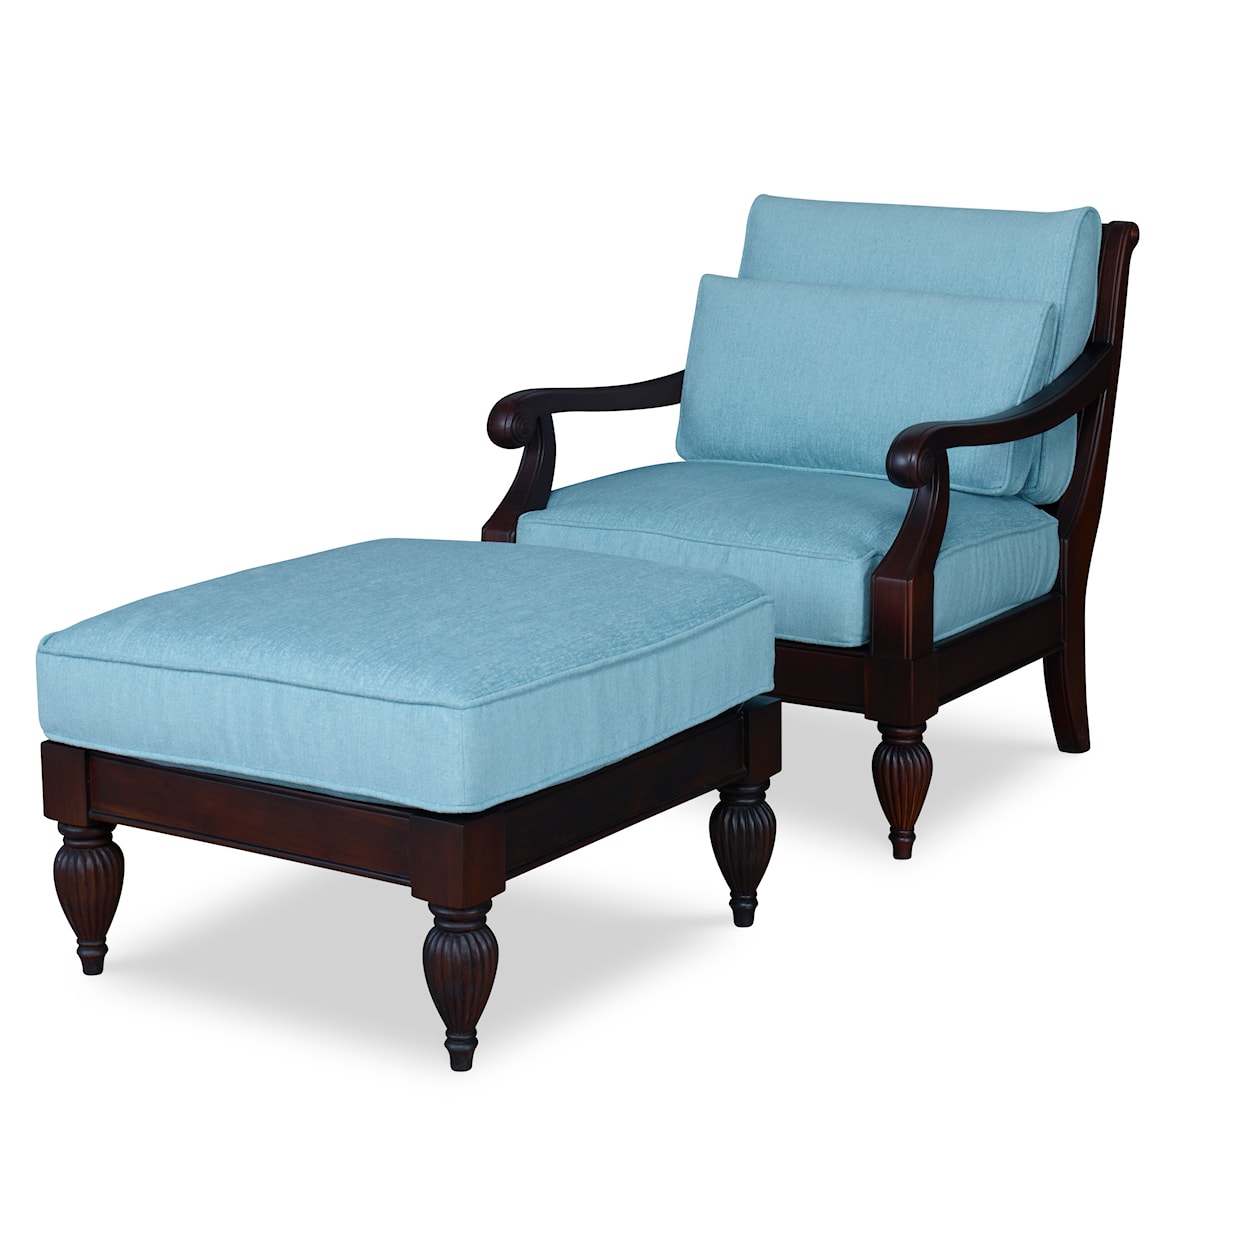 Century Archipelago Lounge Chair